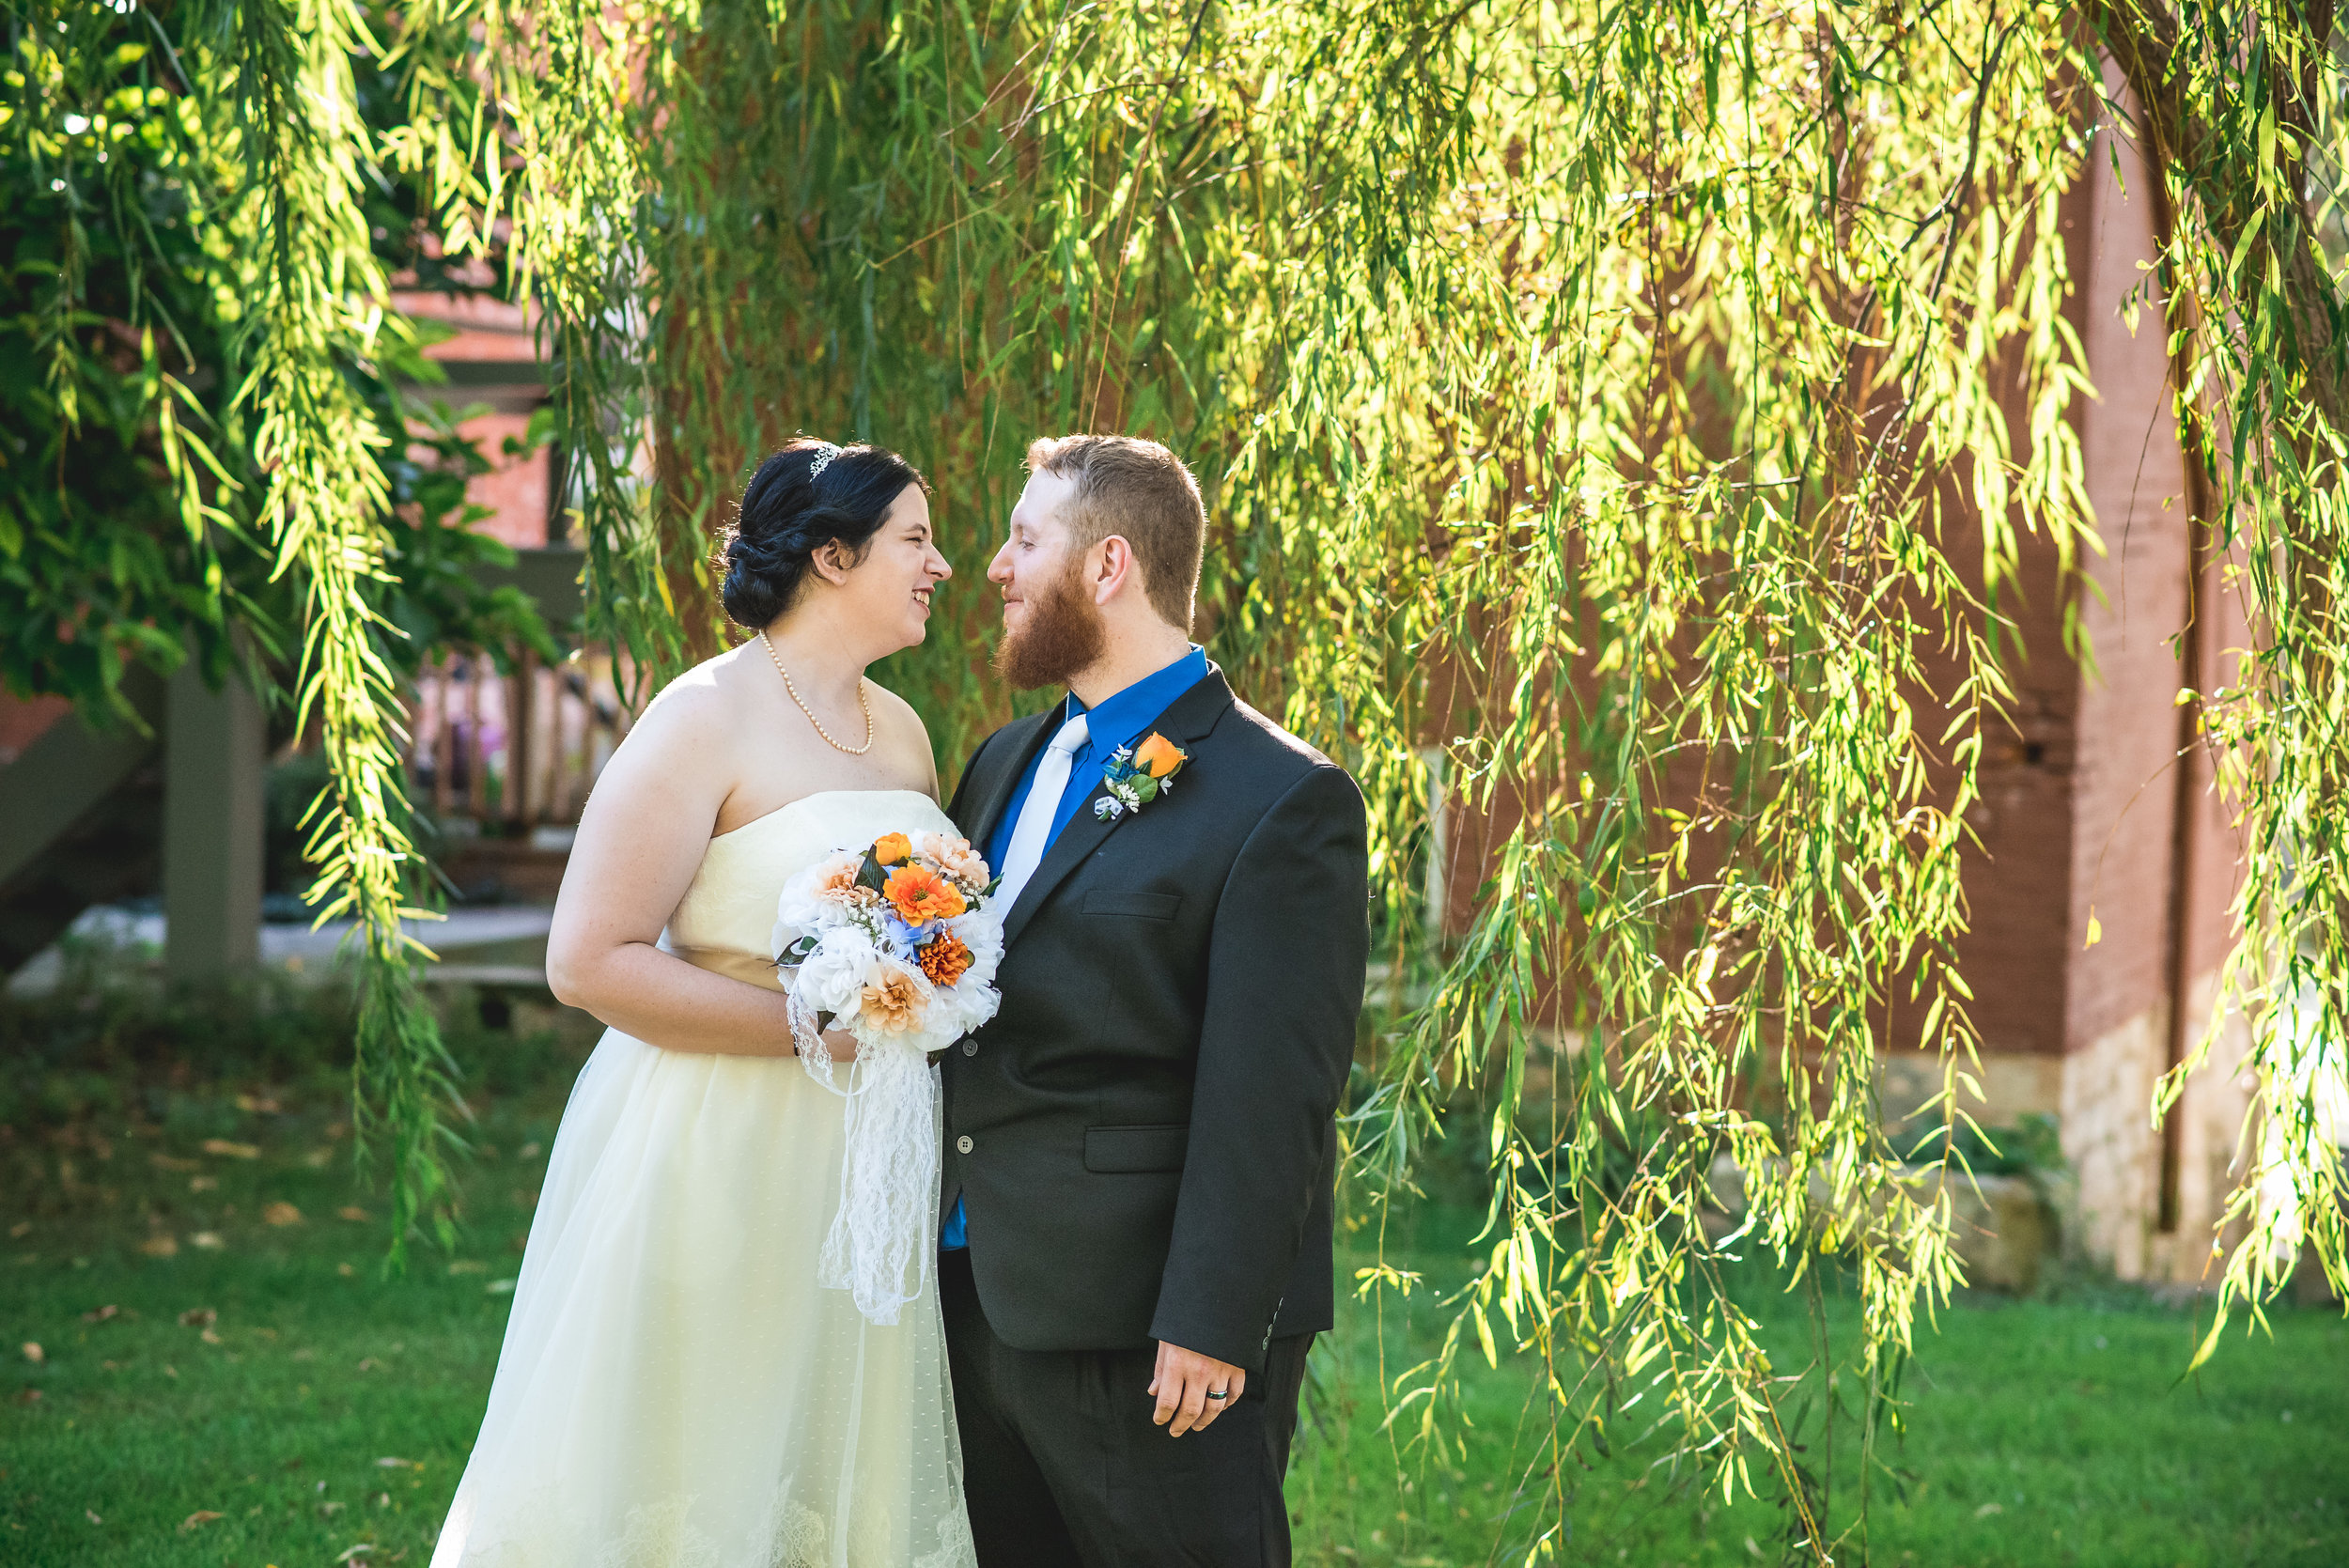 Columbus Ohio Wedding Photographer | Outdoor wedding